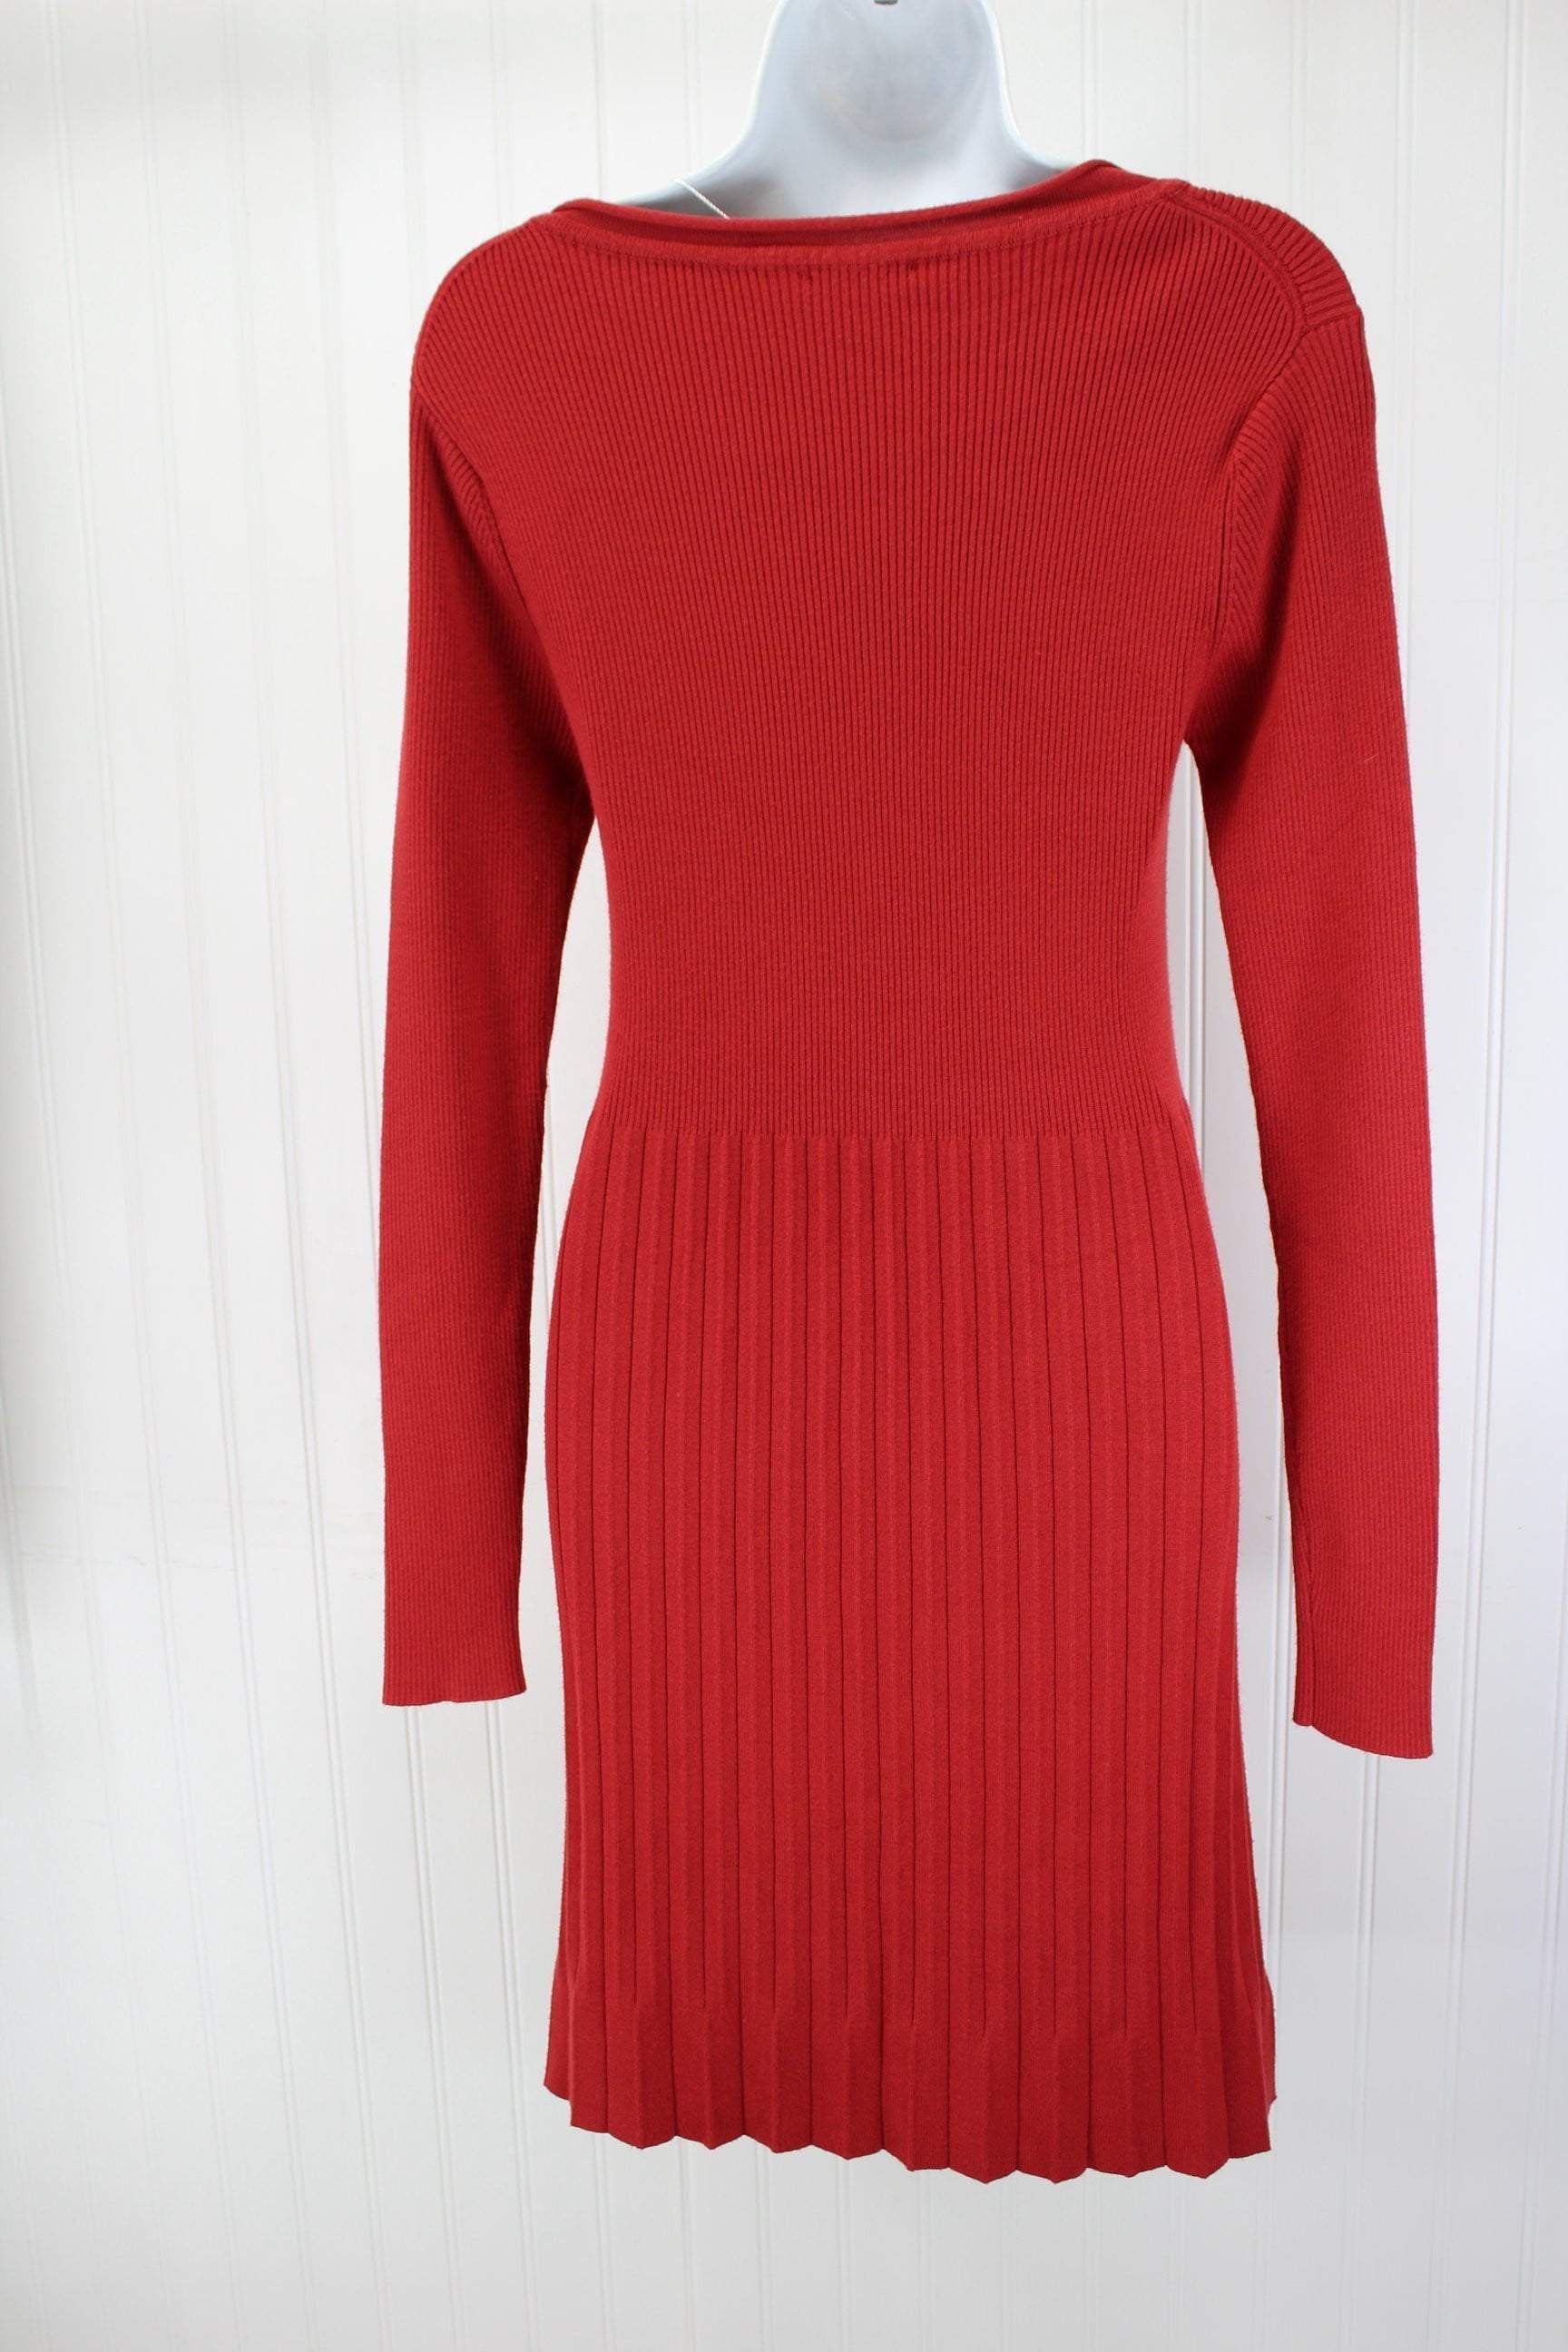 bip-bip Dress - Burnt Sienna Knit Scoop Neck Pleated Size M Zaragoza Spain classic pleated knit